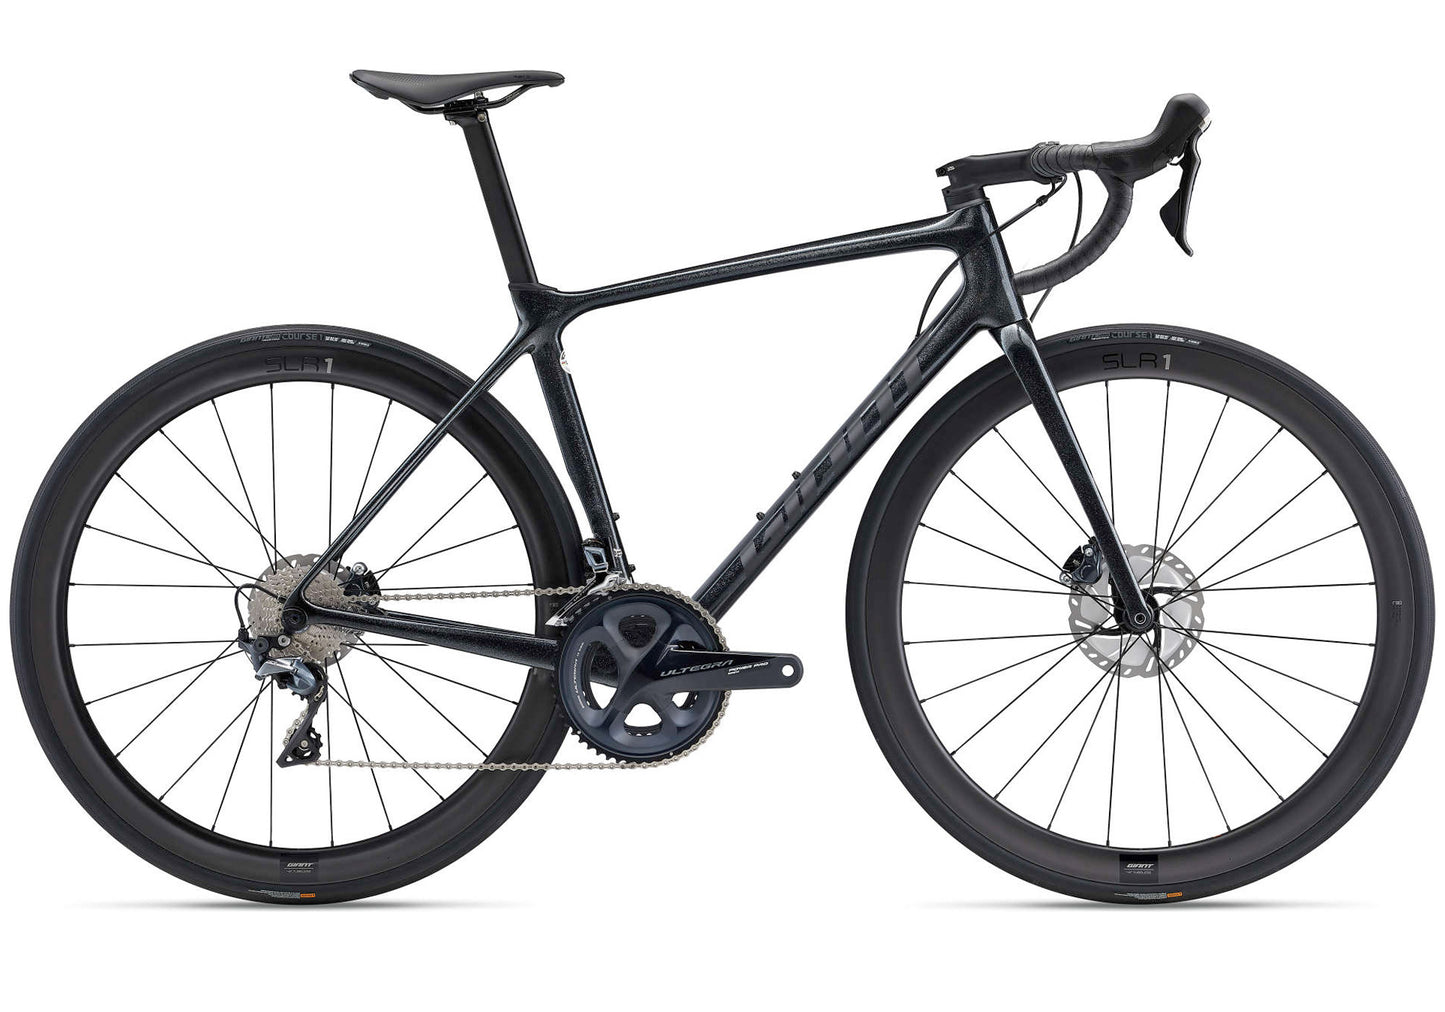 2022 Giant TCR Advanced Pro Disc 1 Mens Road Bike - Gloss Black Diamond buy at Woolys Wheels Sydney